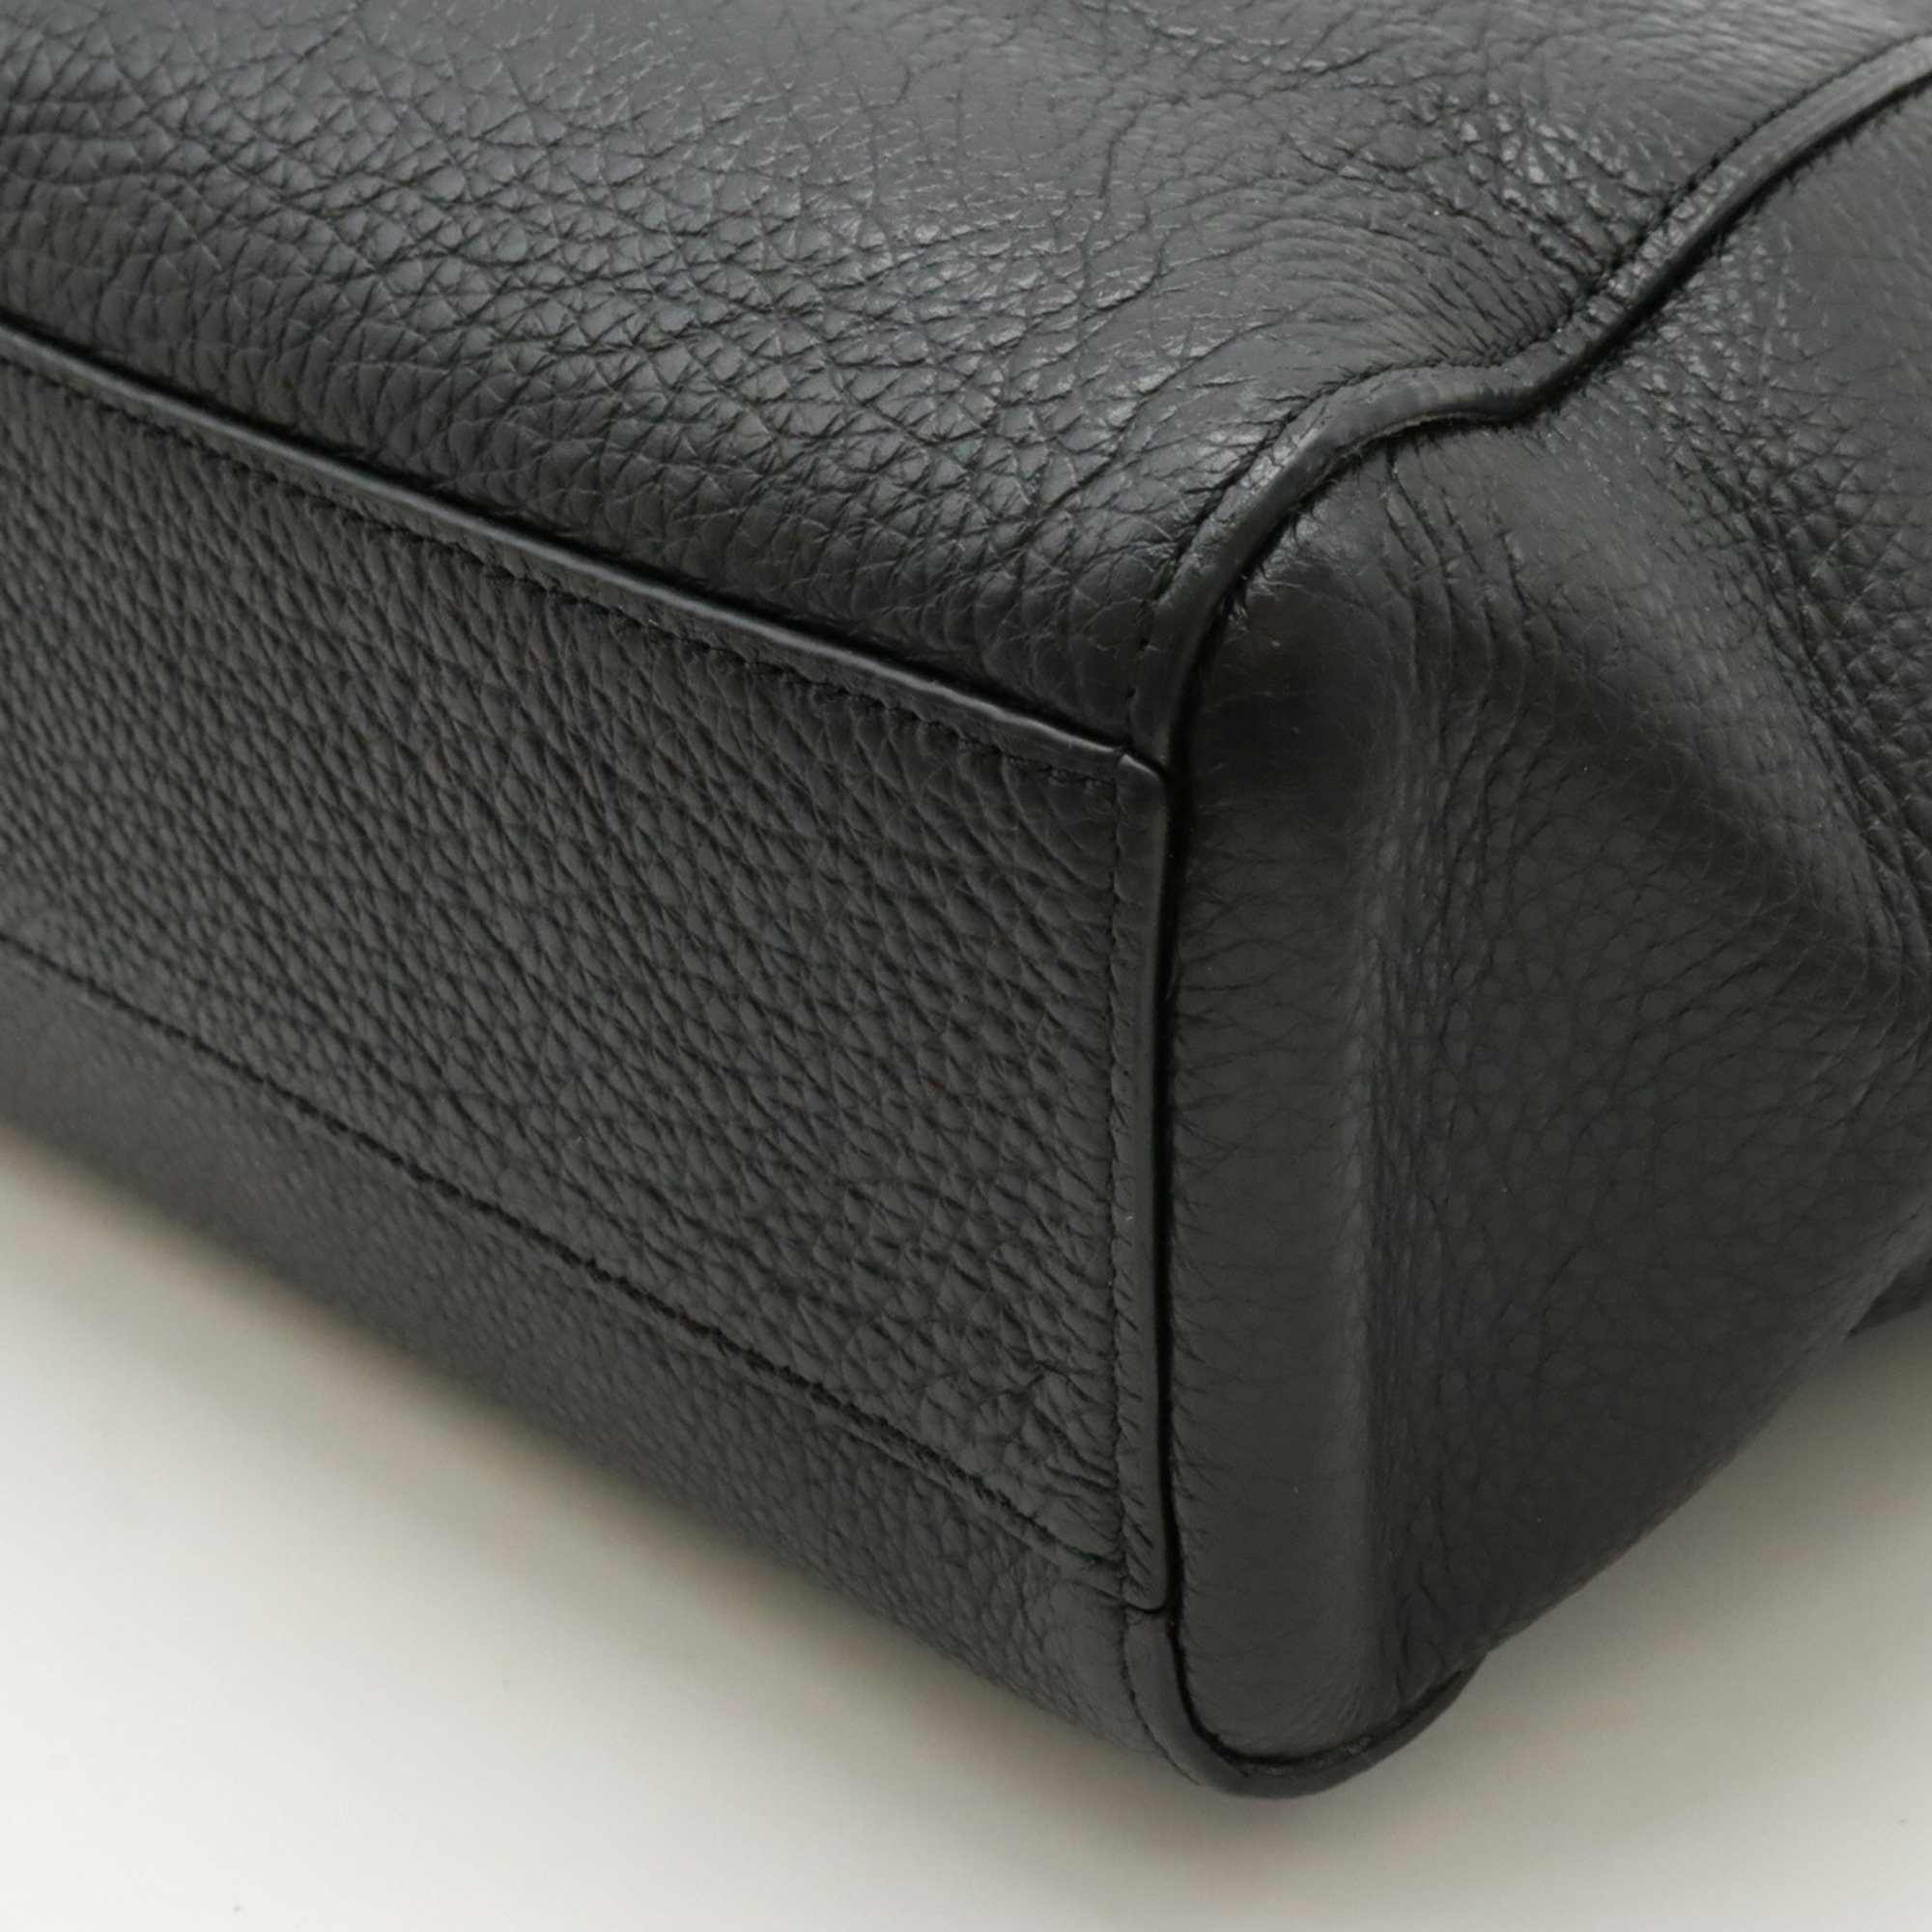 COACH Prairie Satchel Handbag Shoulder Bag Leather Black 79997